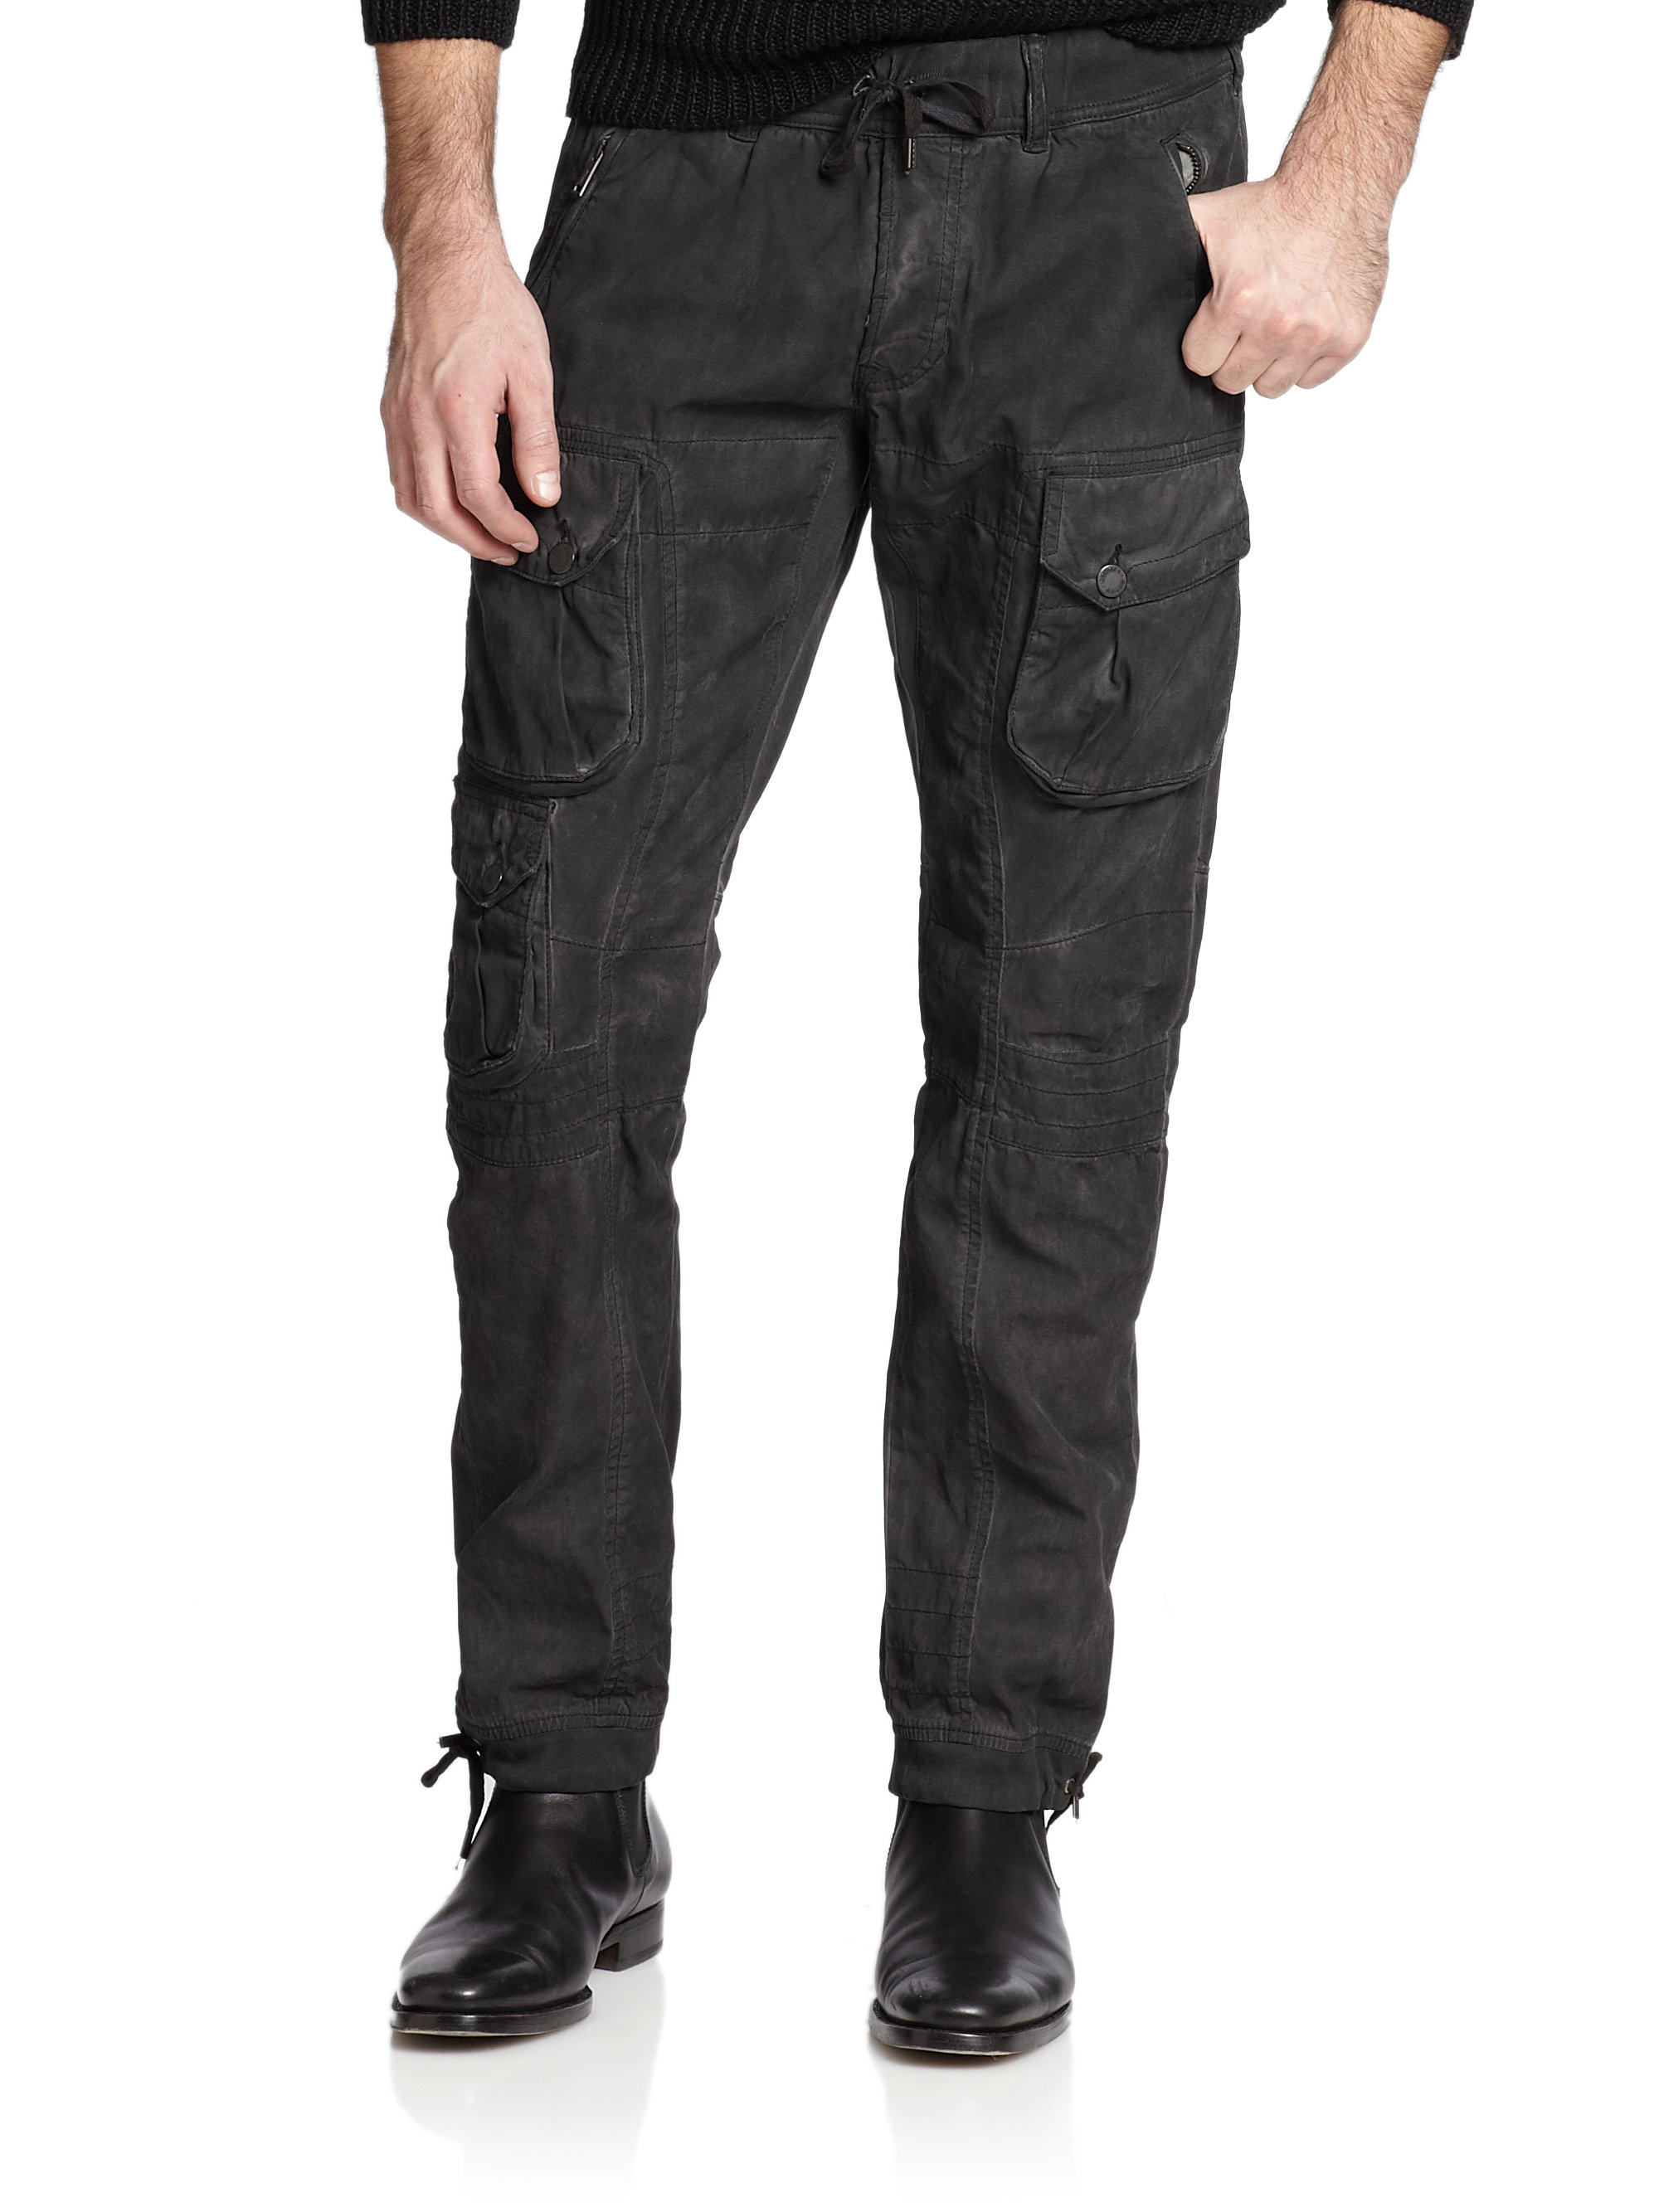 Lyst - Ralph lauren black label Defender Moto Jeans in Black for Men